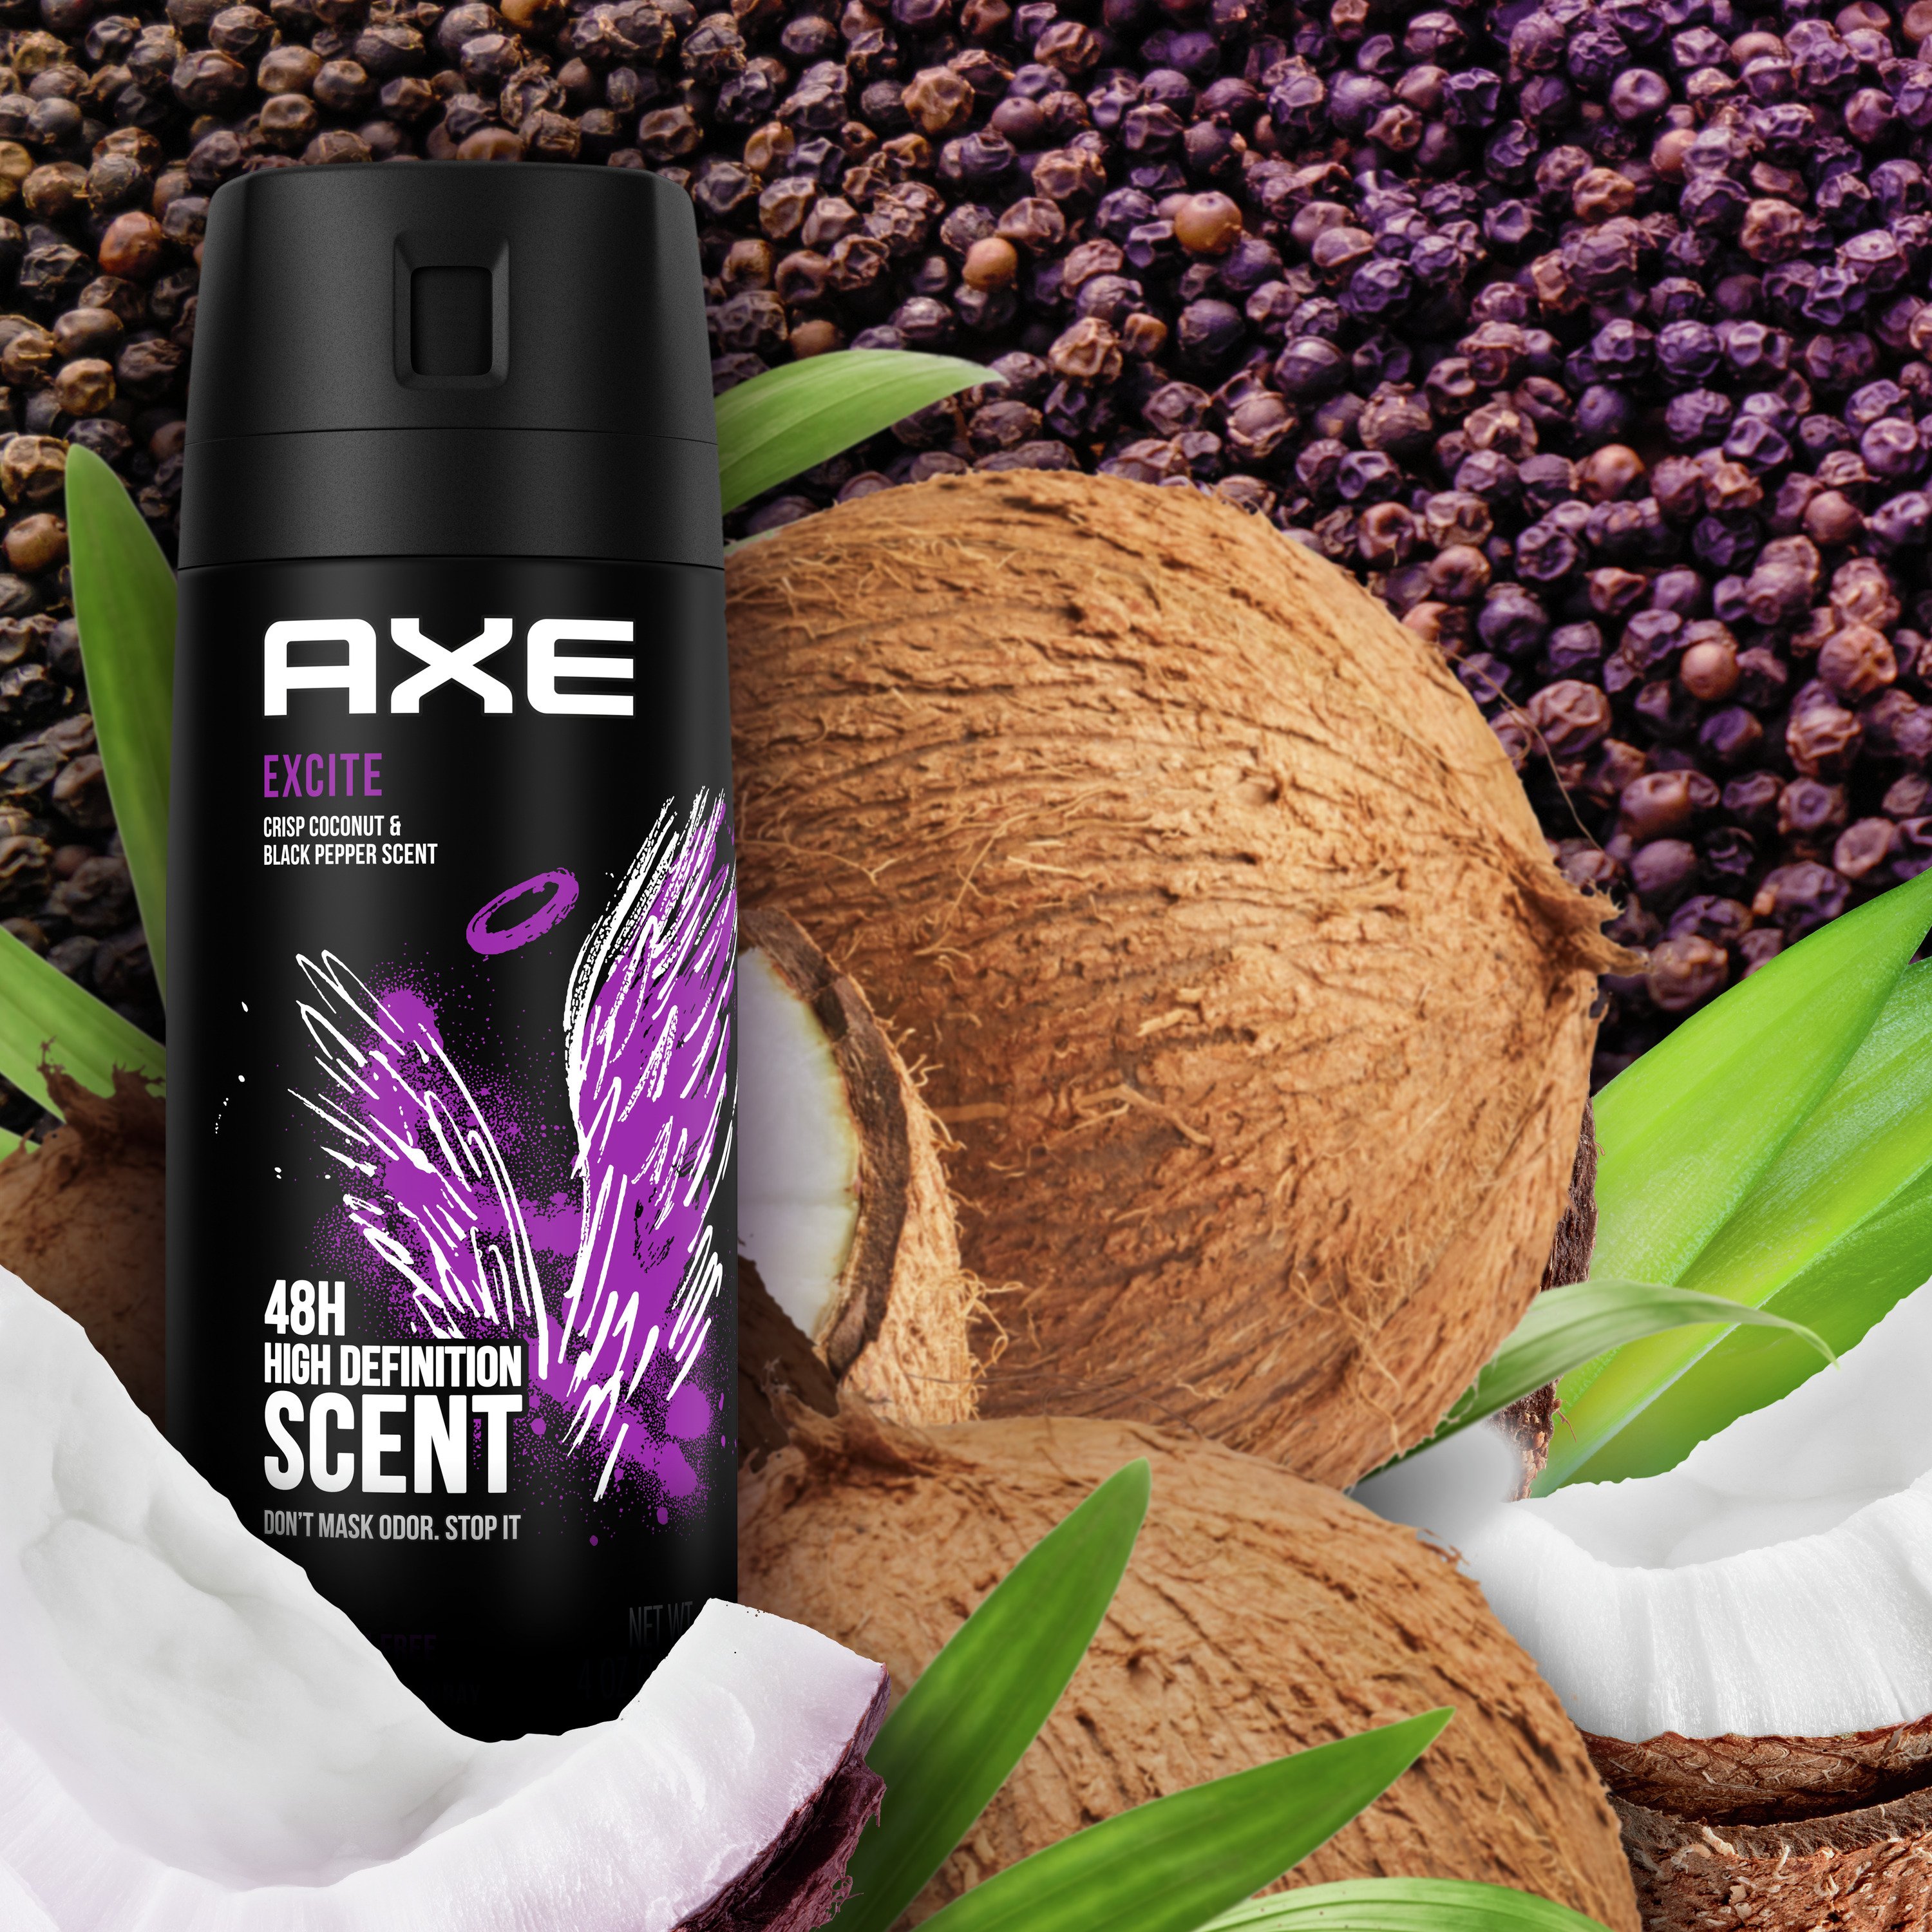 Snooze Ophef Alternatief AXE Body Spray Deodorant - Excite - Shop Deodorant & Antiperspirant at H-E-B